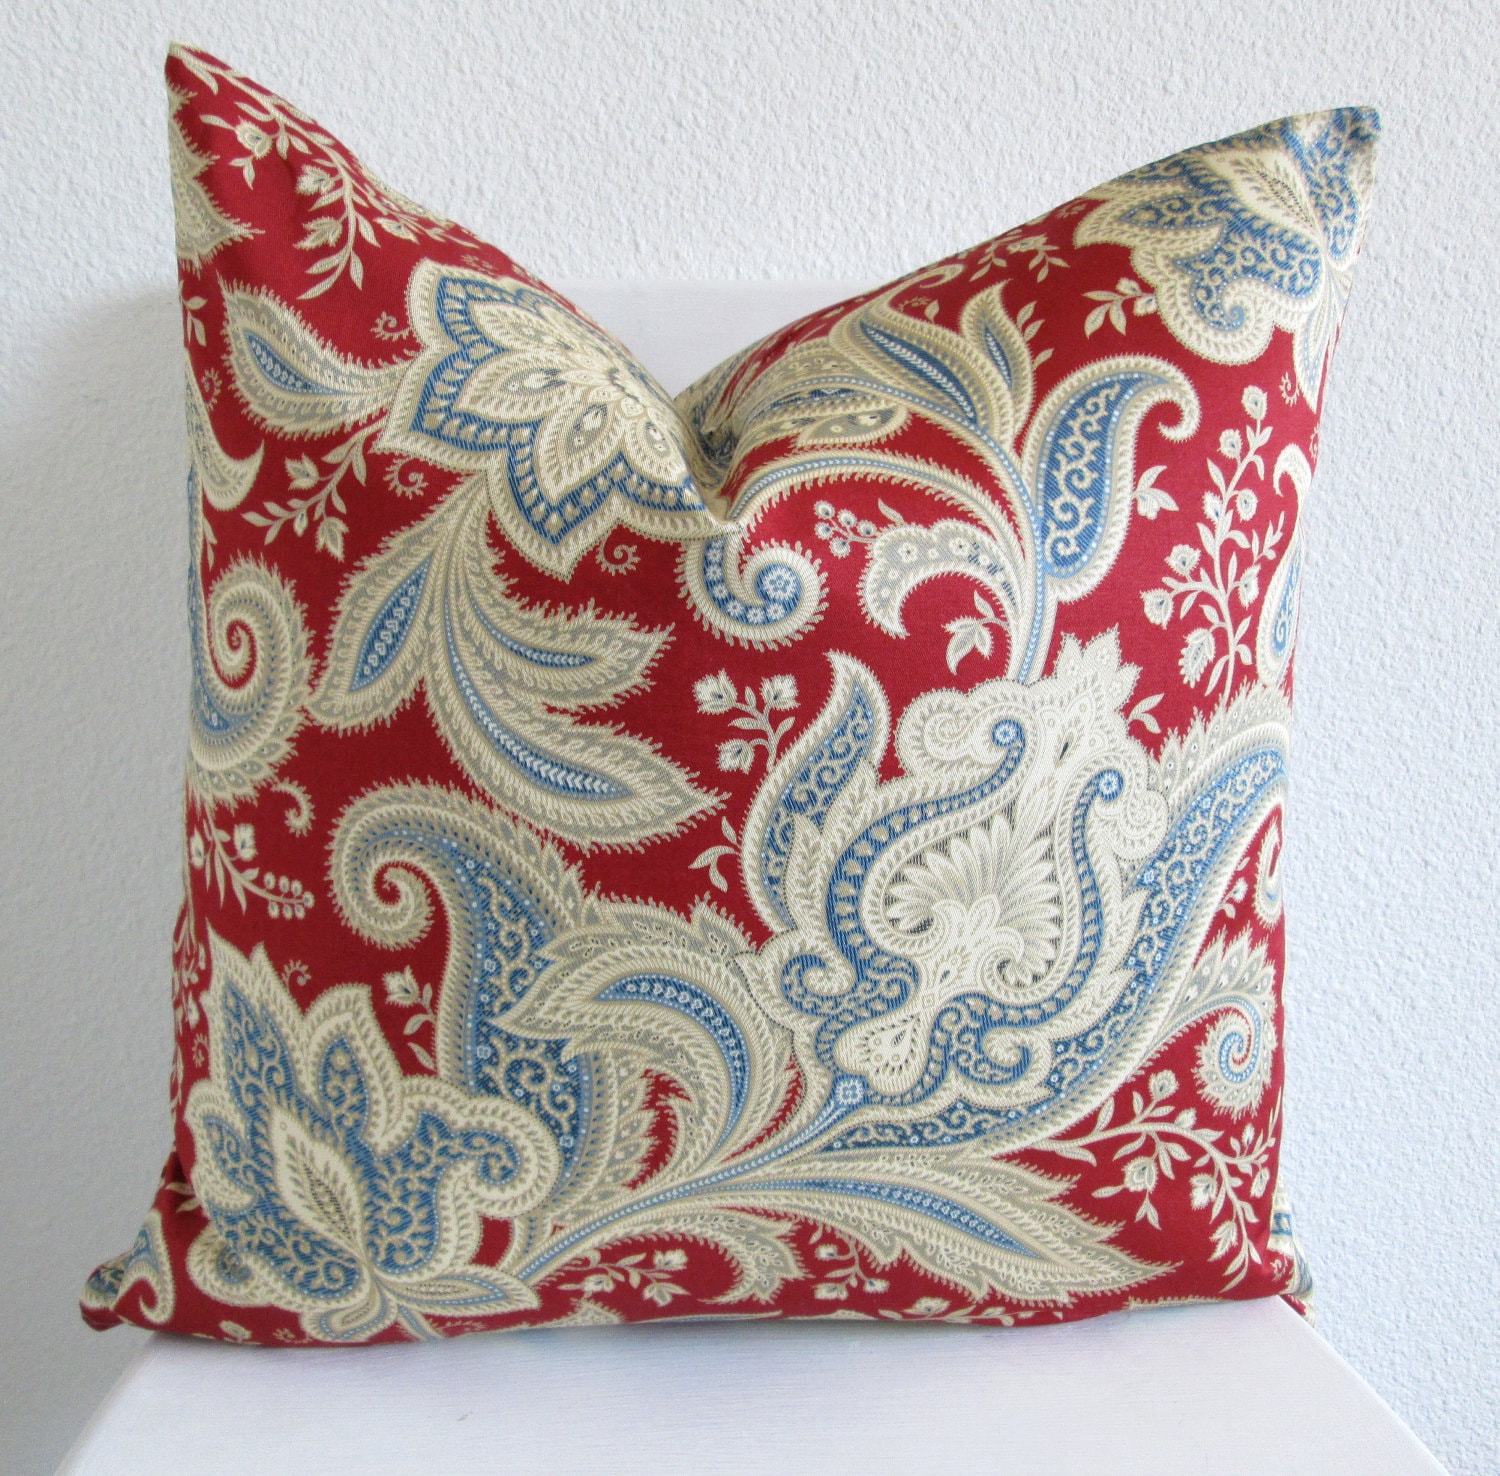 Decorative pillow Throw pillow Accent pillow by vintagechicdecor